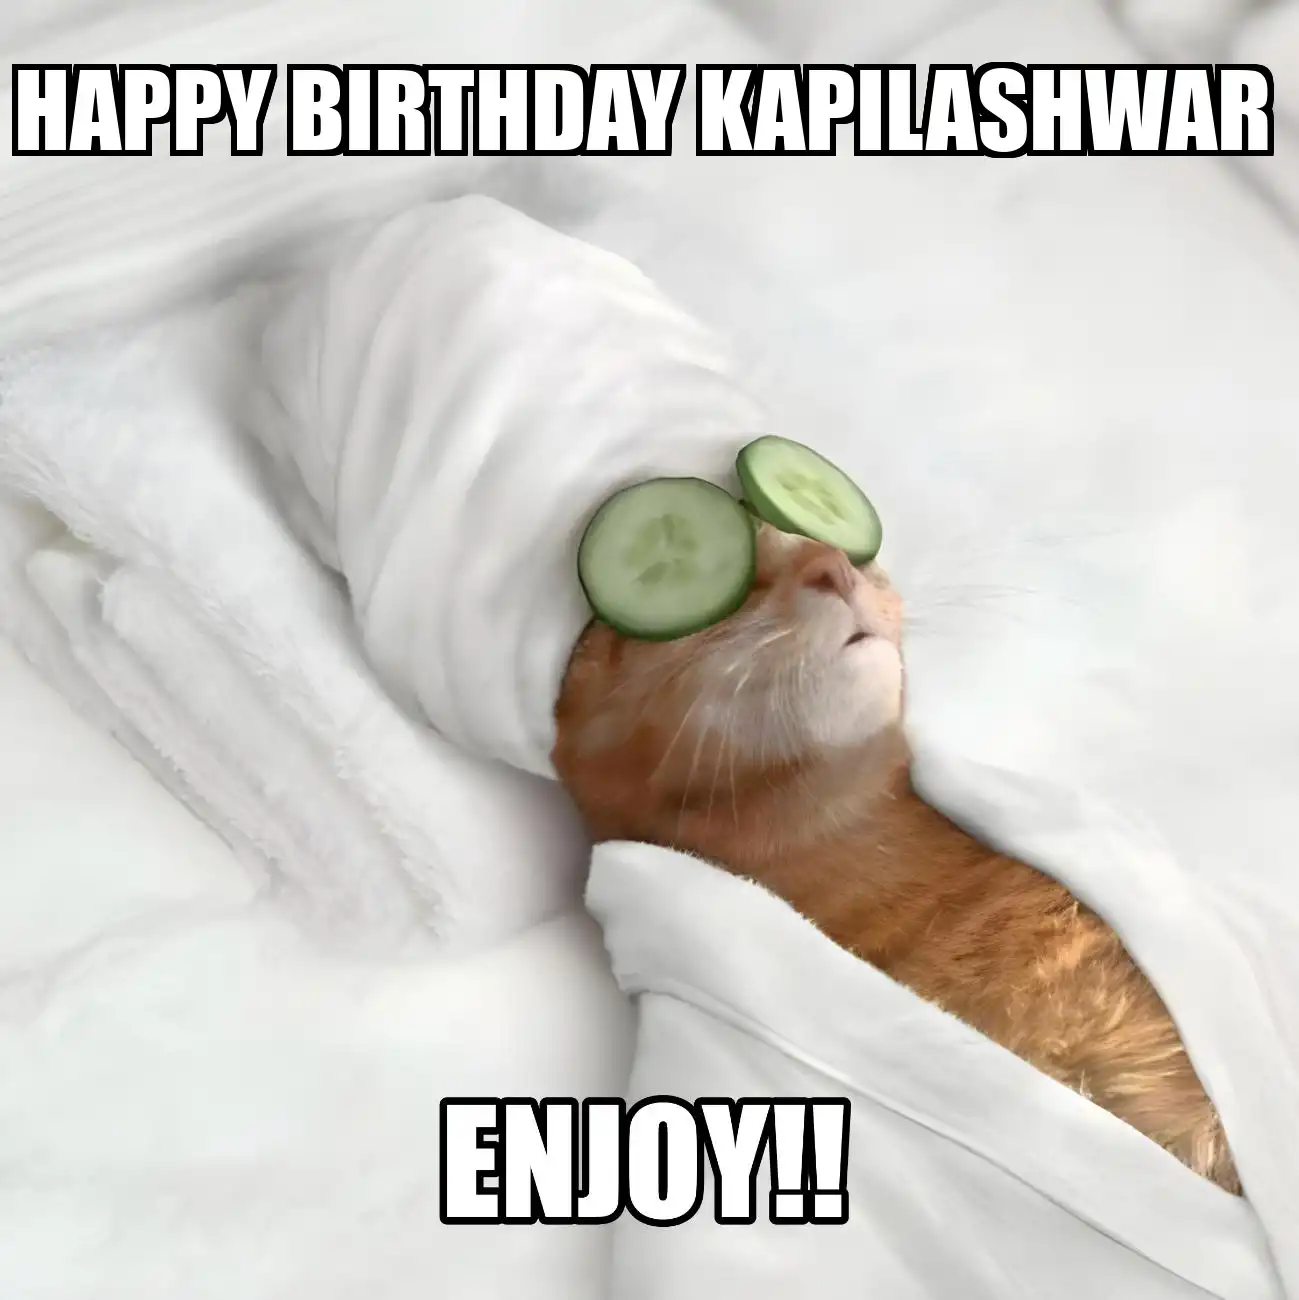 Happy Birthday Kapilashwar Enjoy Cat Meme